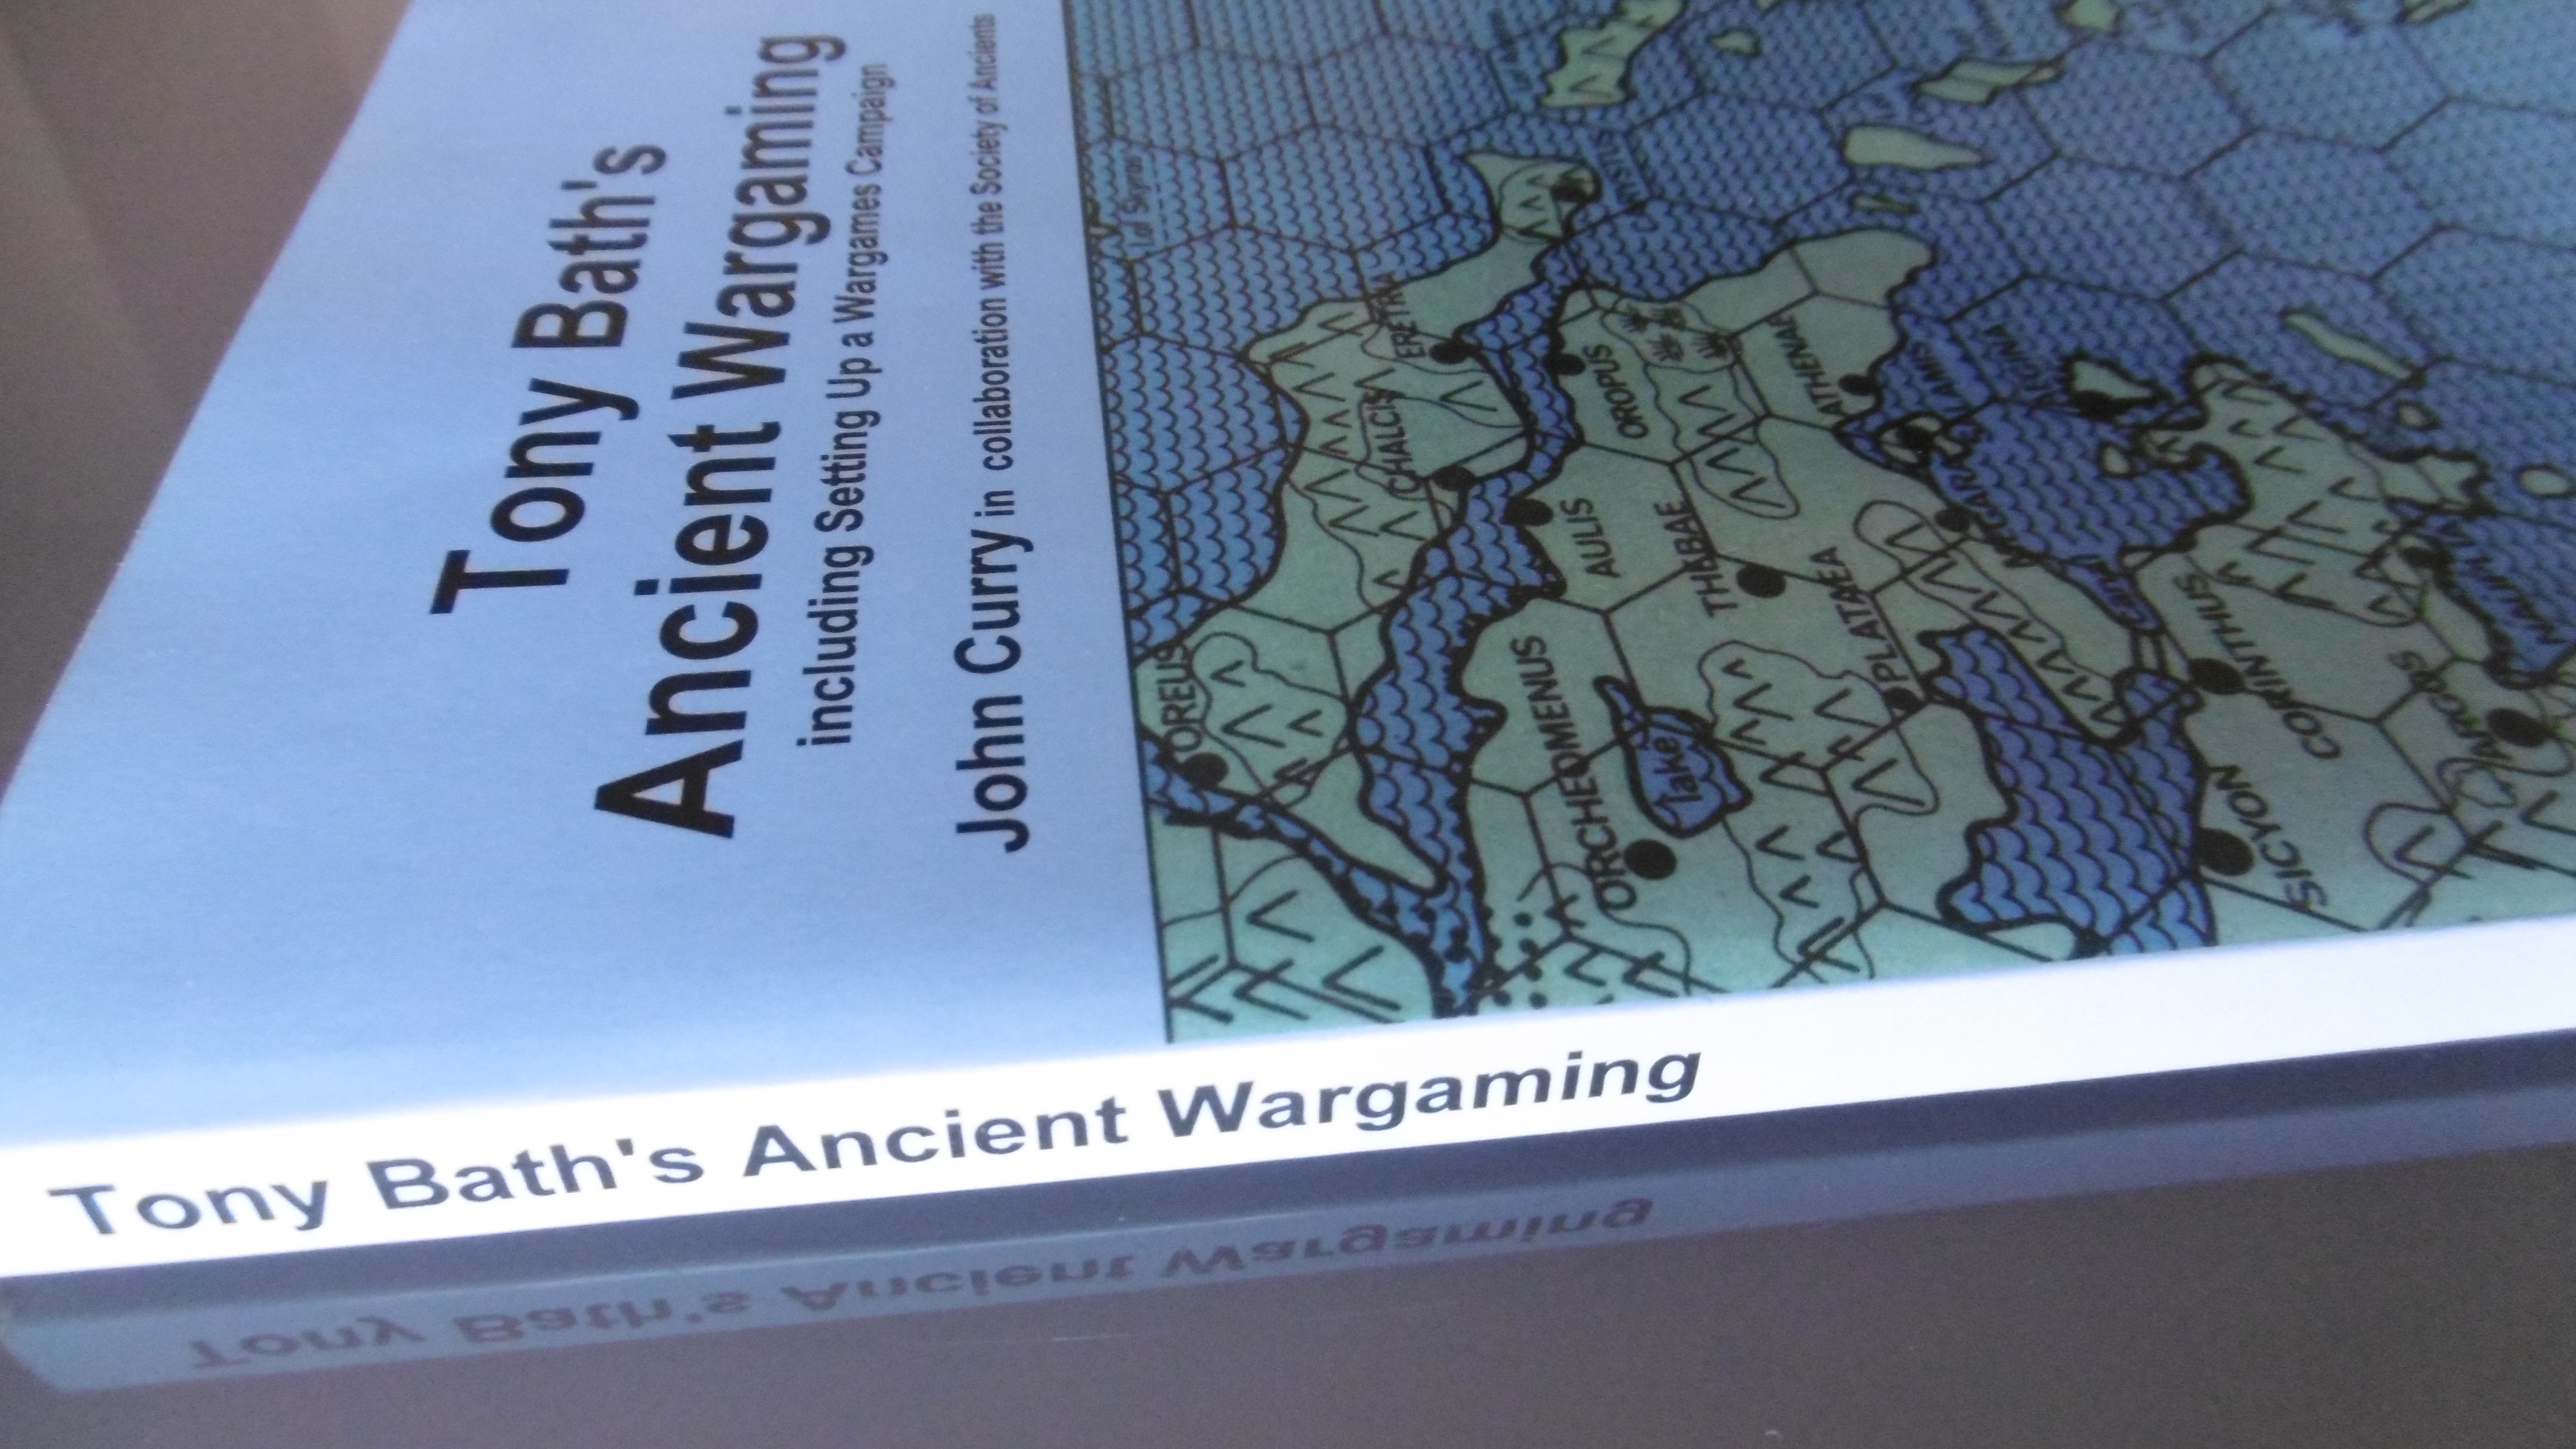 Tony Bath’s Ancient Wargaming including Setting Up a Wargames Campaign